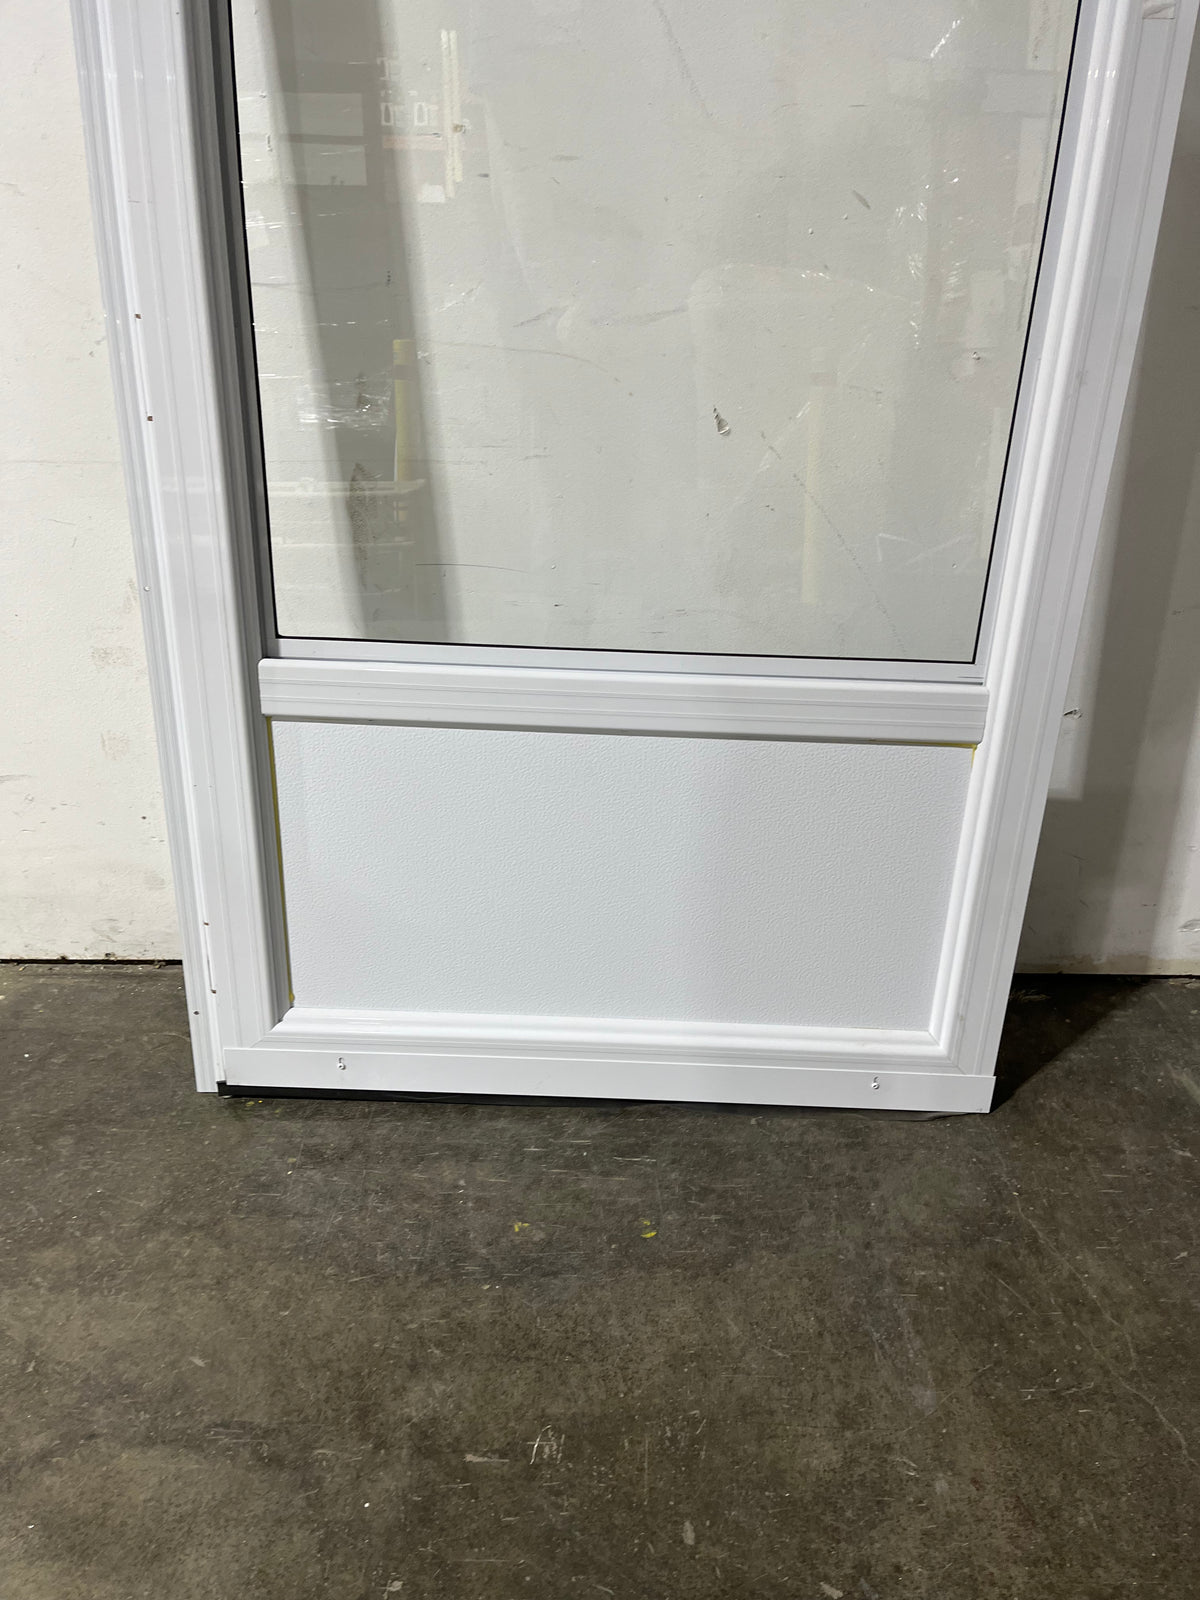 32" x 80" Aluminum Storm Door White